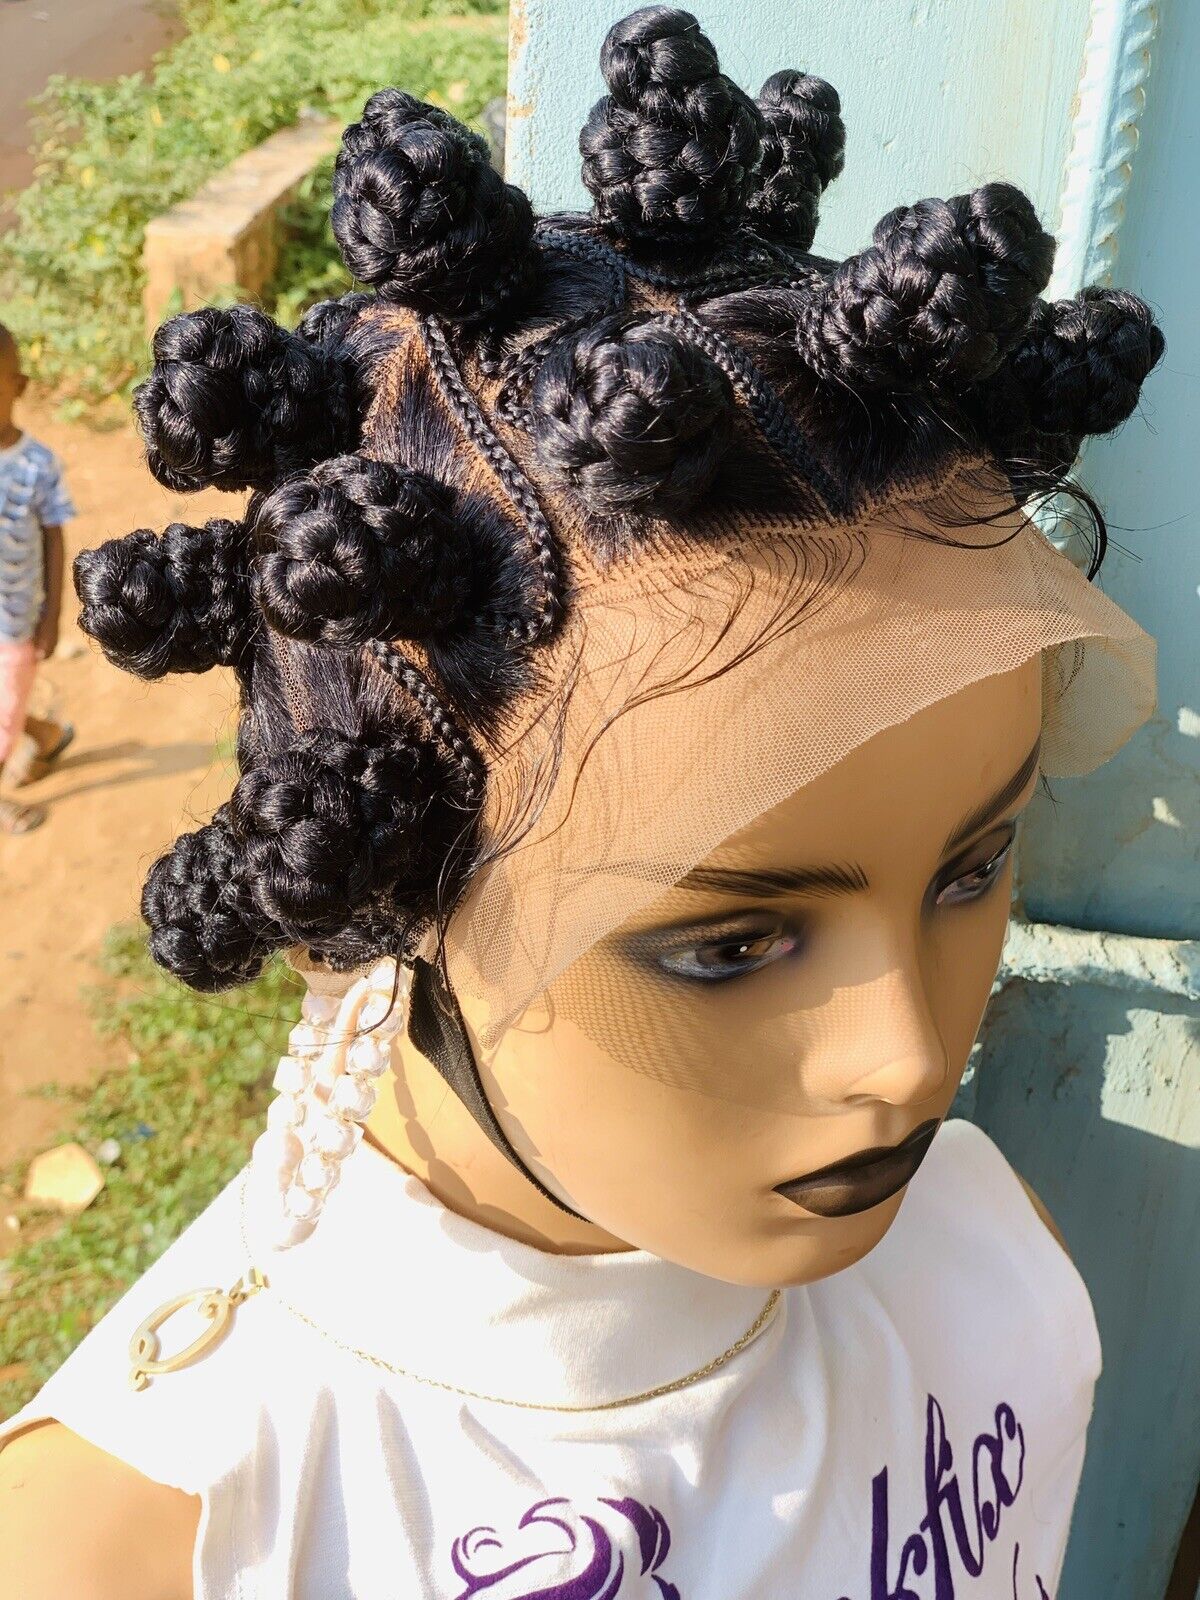 Bantu Knots On Full Lace Wig